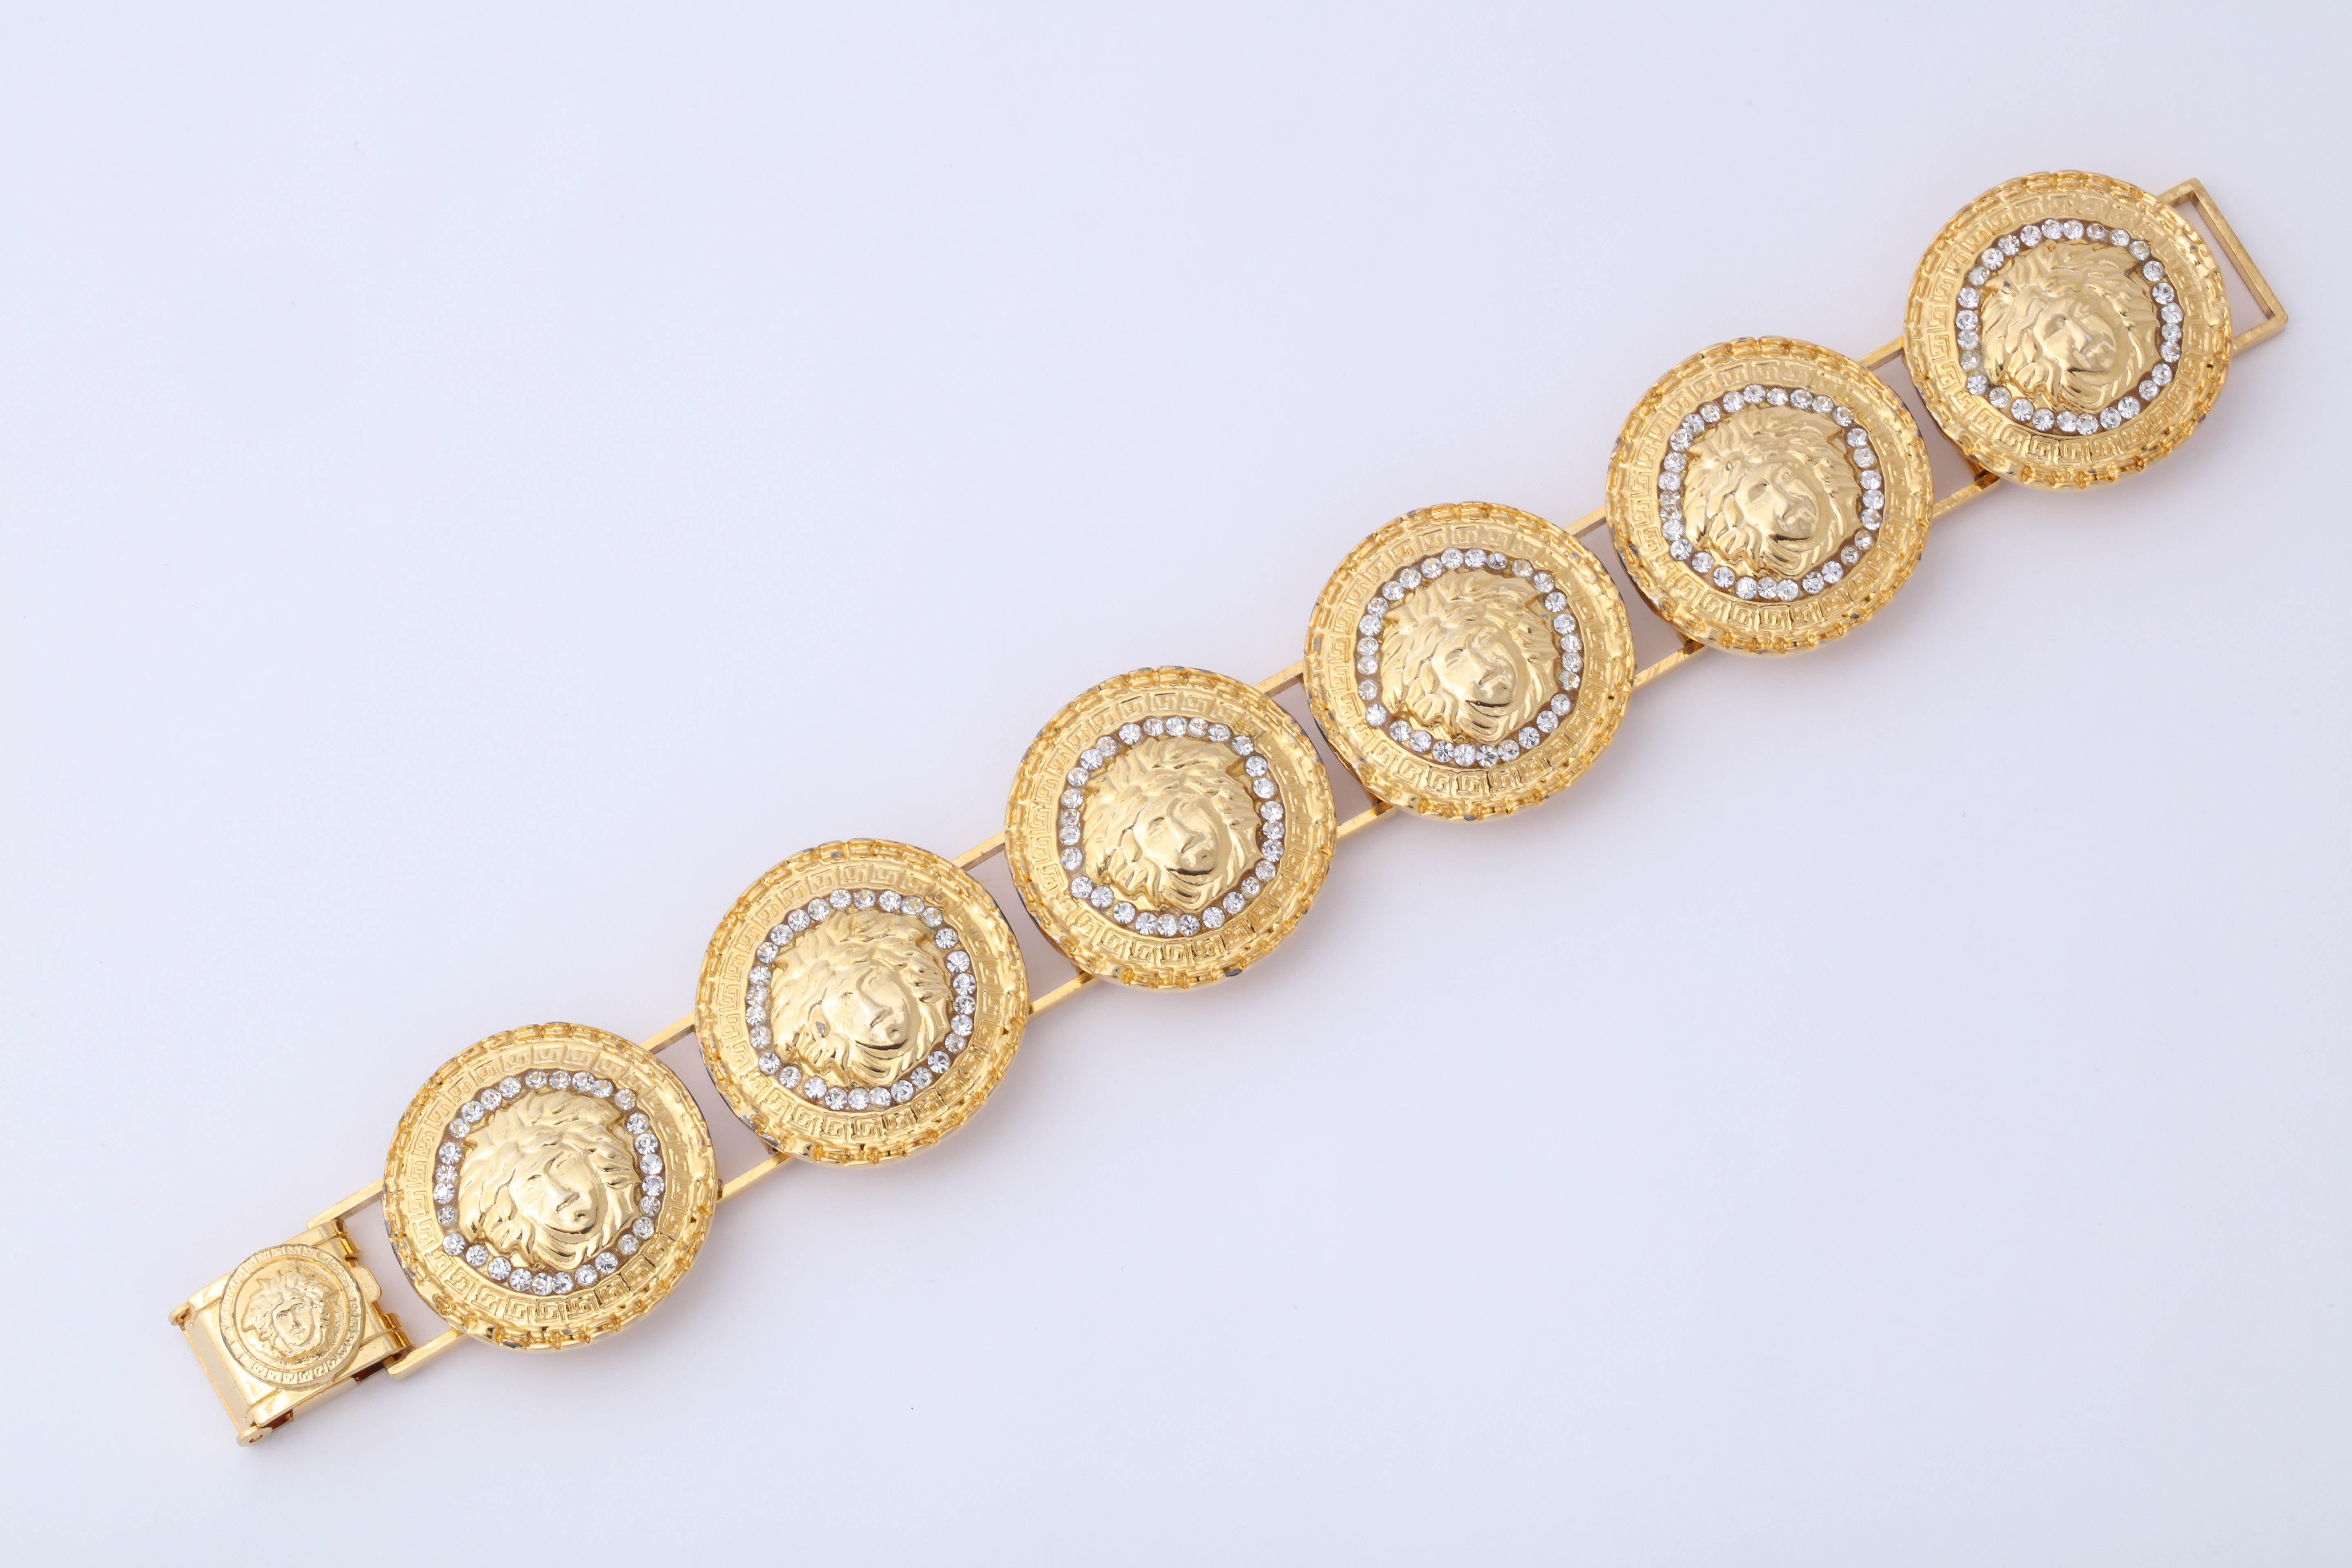 Gianni Versace gold toned bracelet with rhinestones and 6 iconic Medusa motifs.